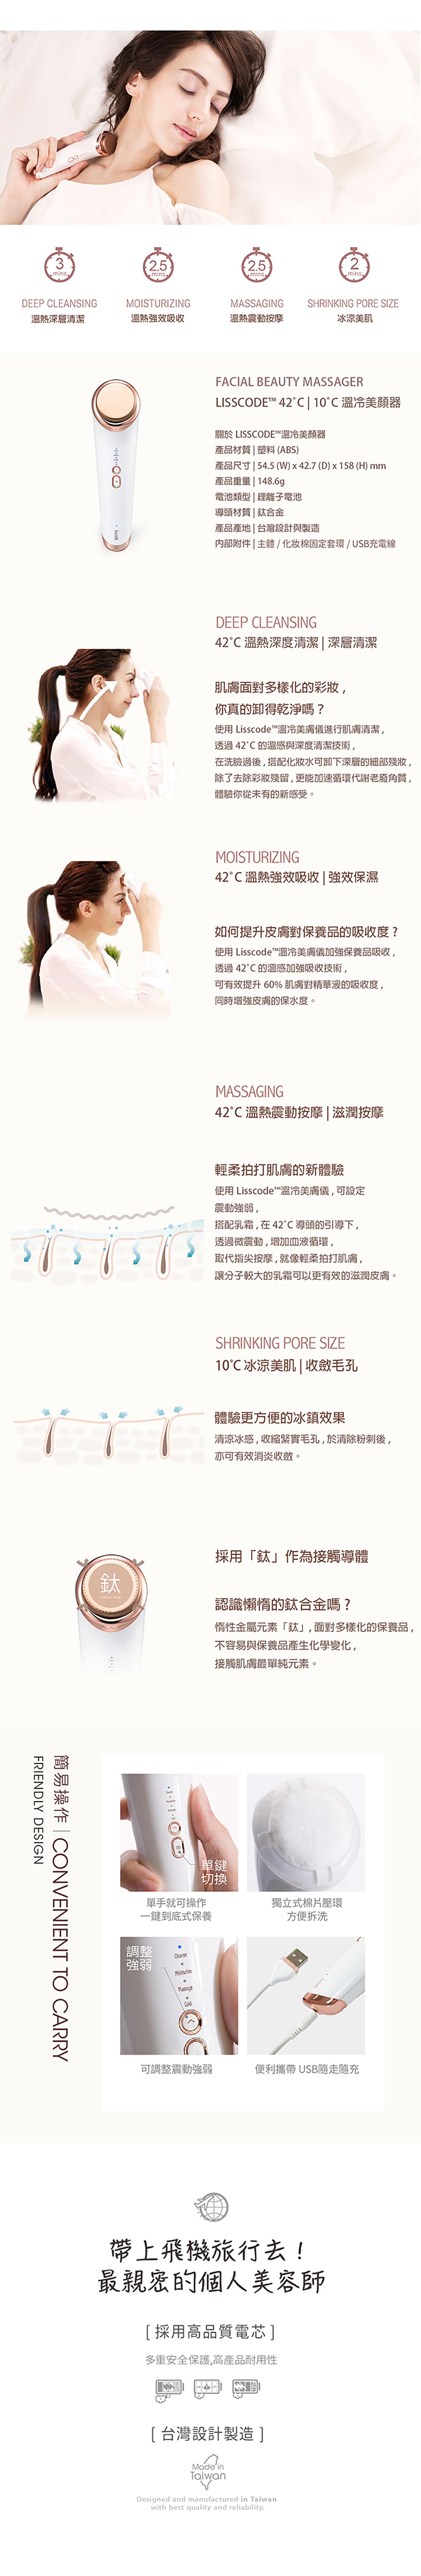 Lisscode 42°C - 10°C 溫冷美顏器，台灣製造，10分鐘在家快速完成醫美級保養。